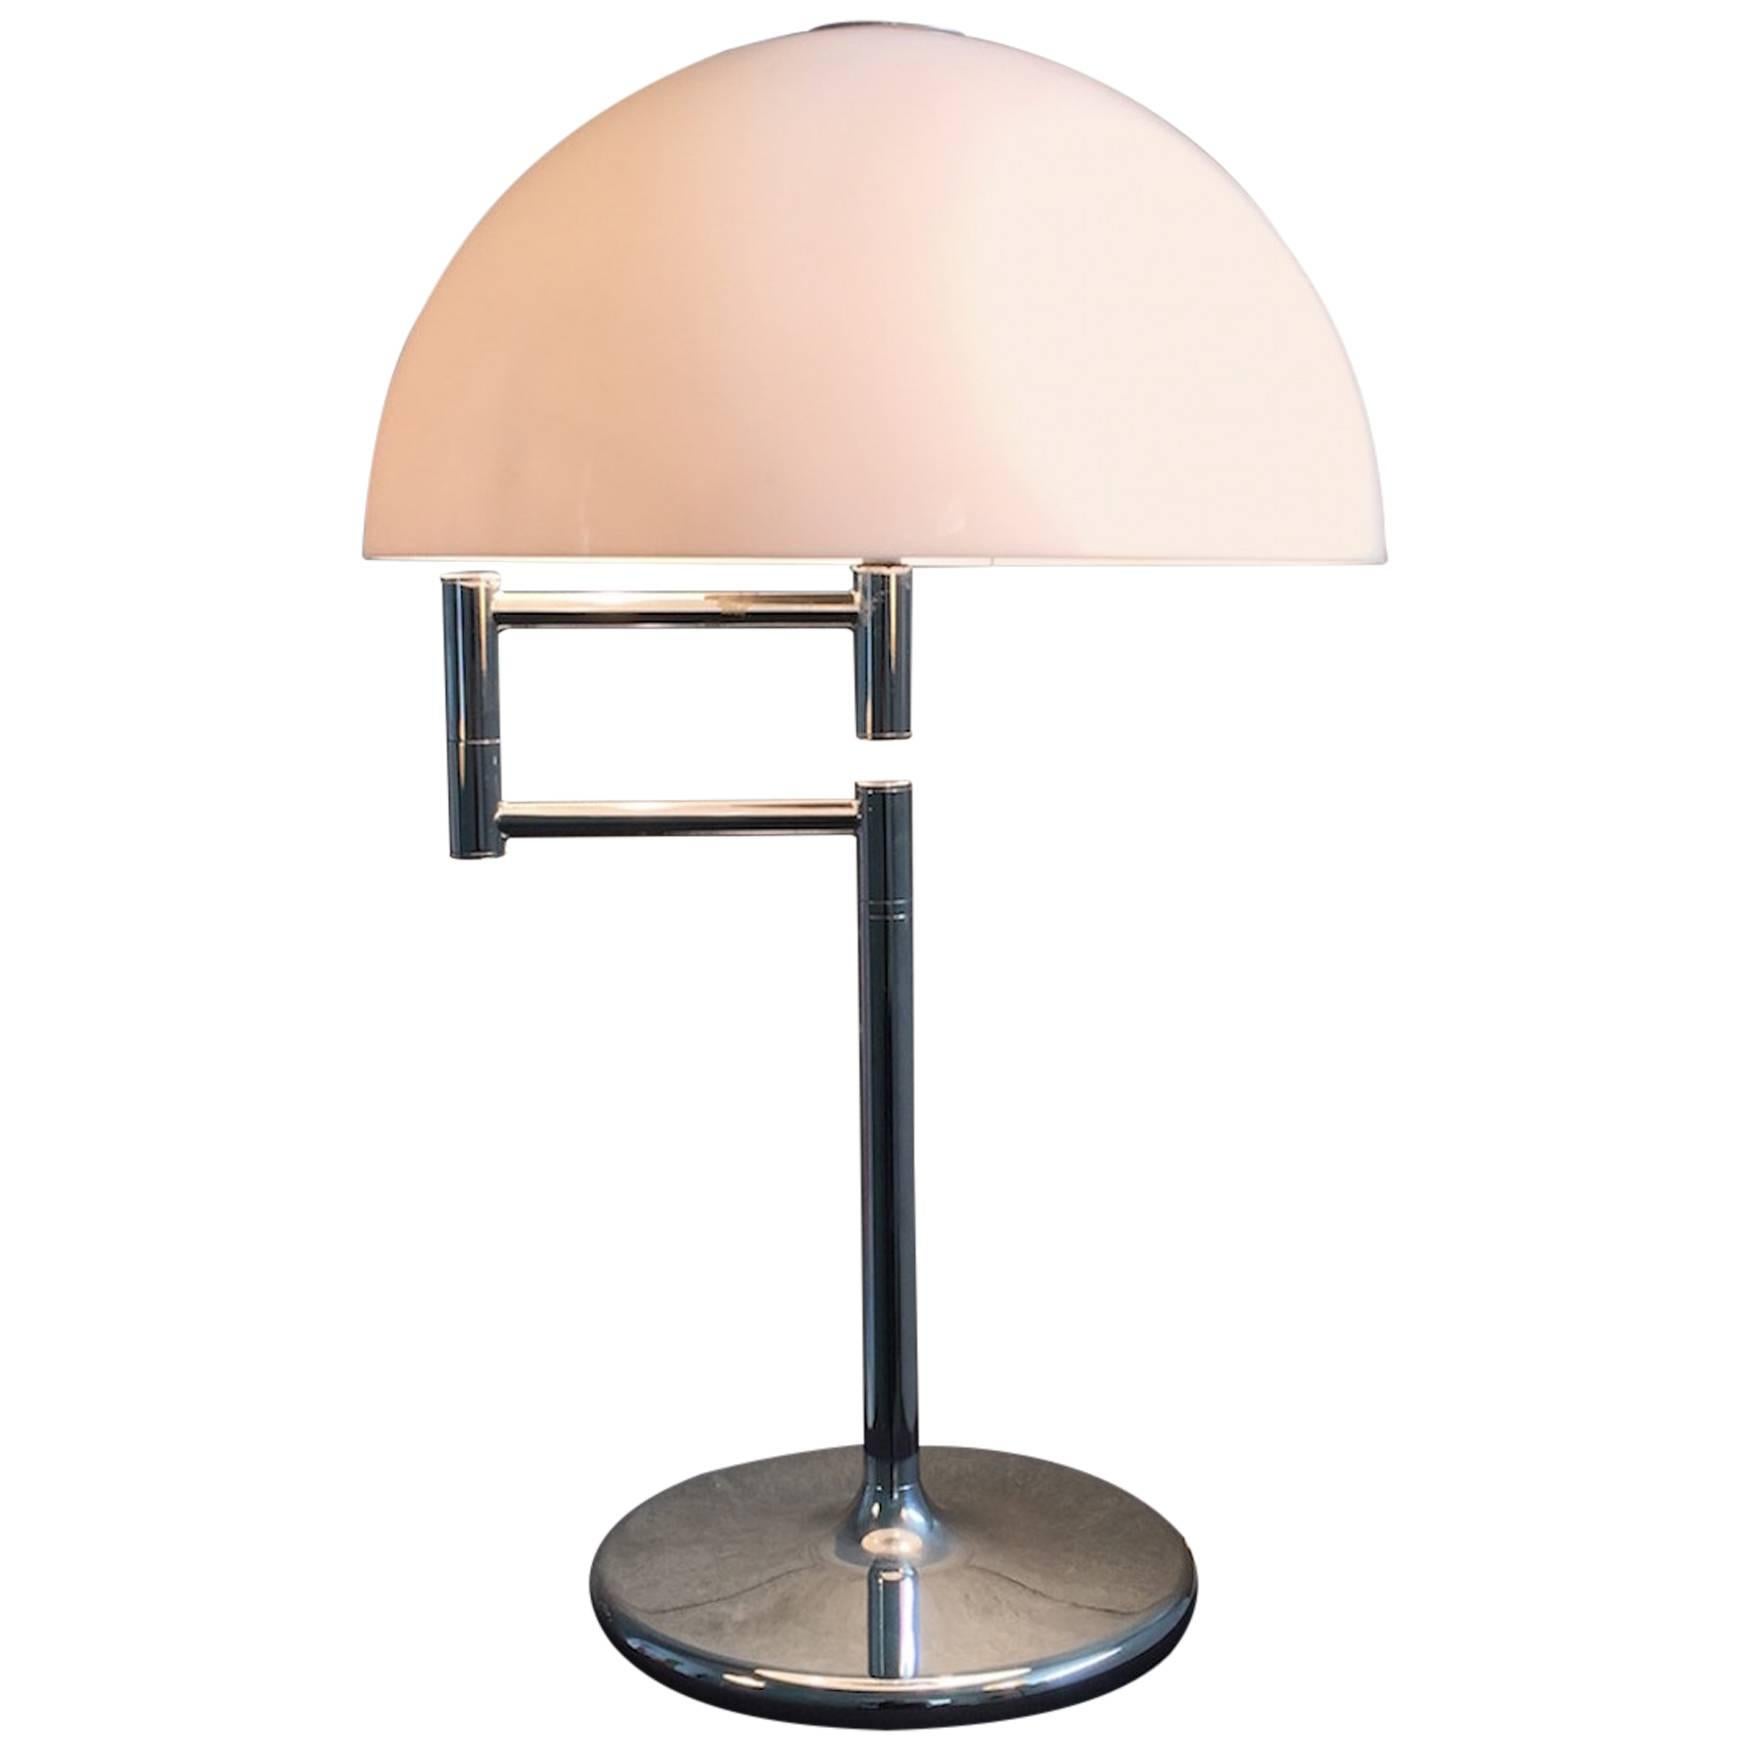 20th Century Italian Chrome Table Lamp with Swing Arm